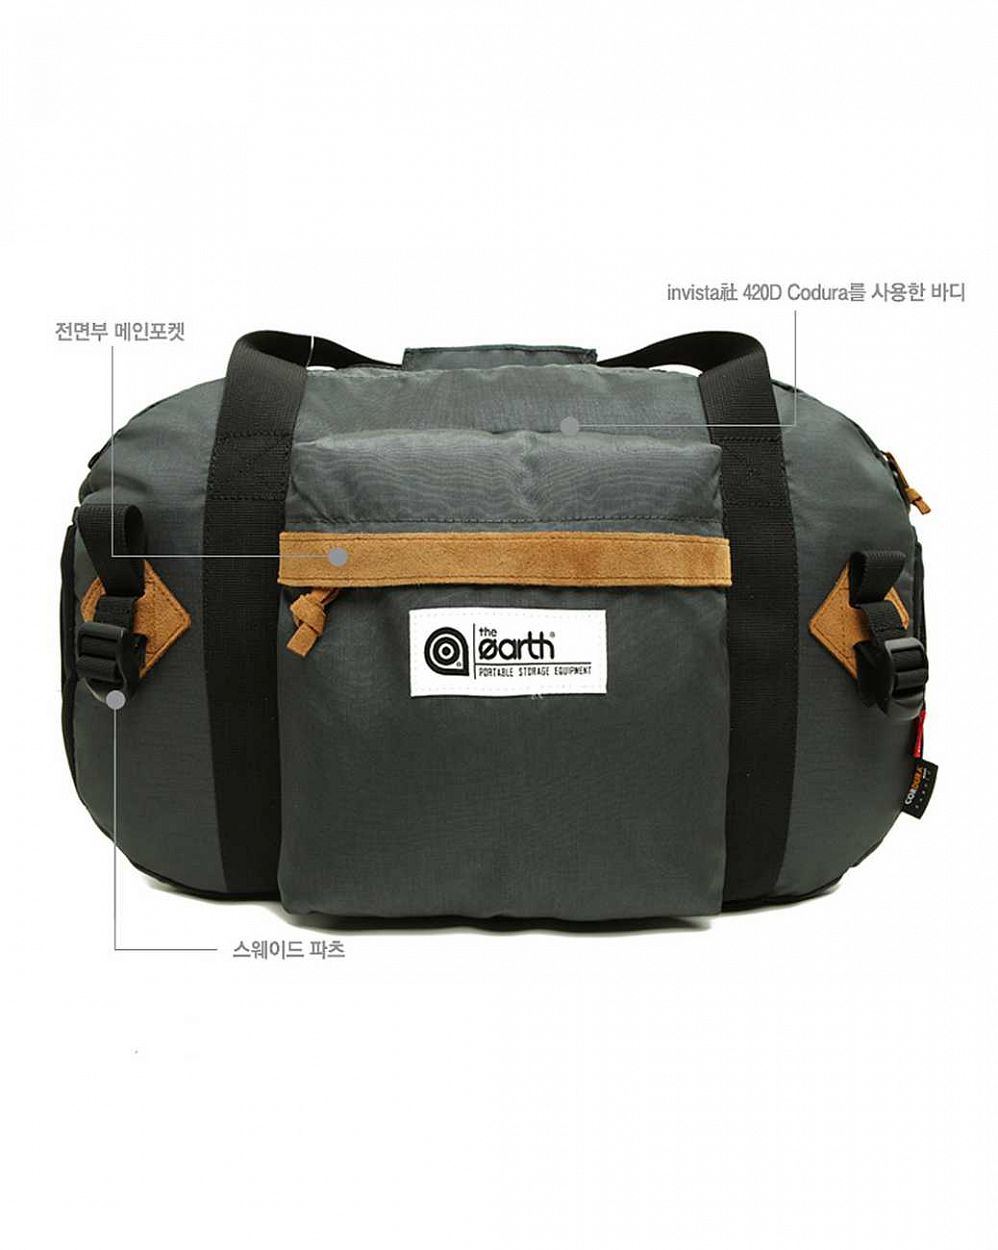 Сумка The earth Company Outdoor 13L Travel Bag Grey отзывы